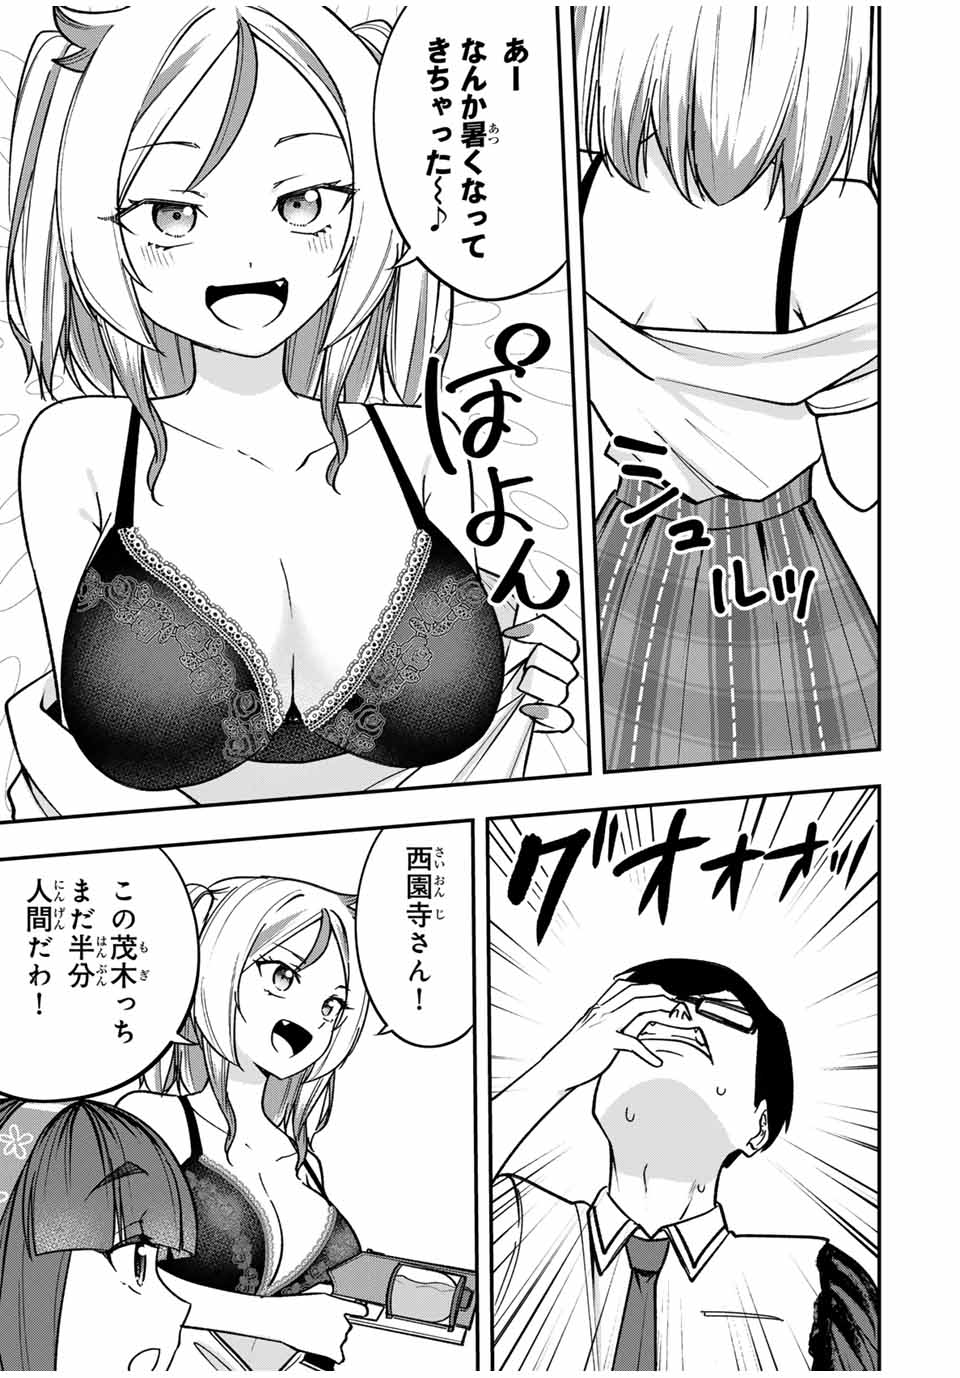 Heroine wa xx Okasegitai - Chapter 10 - Page 9